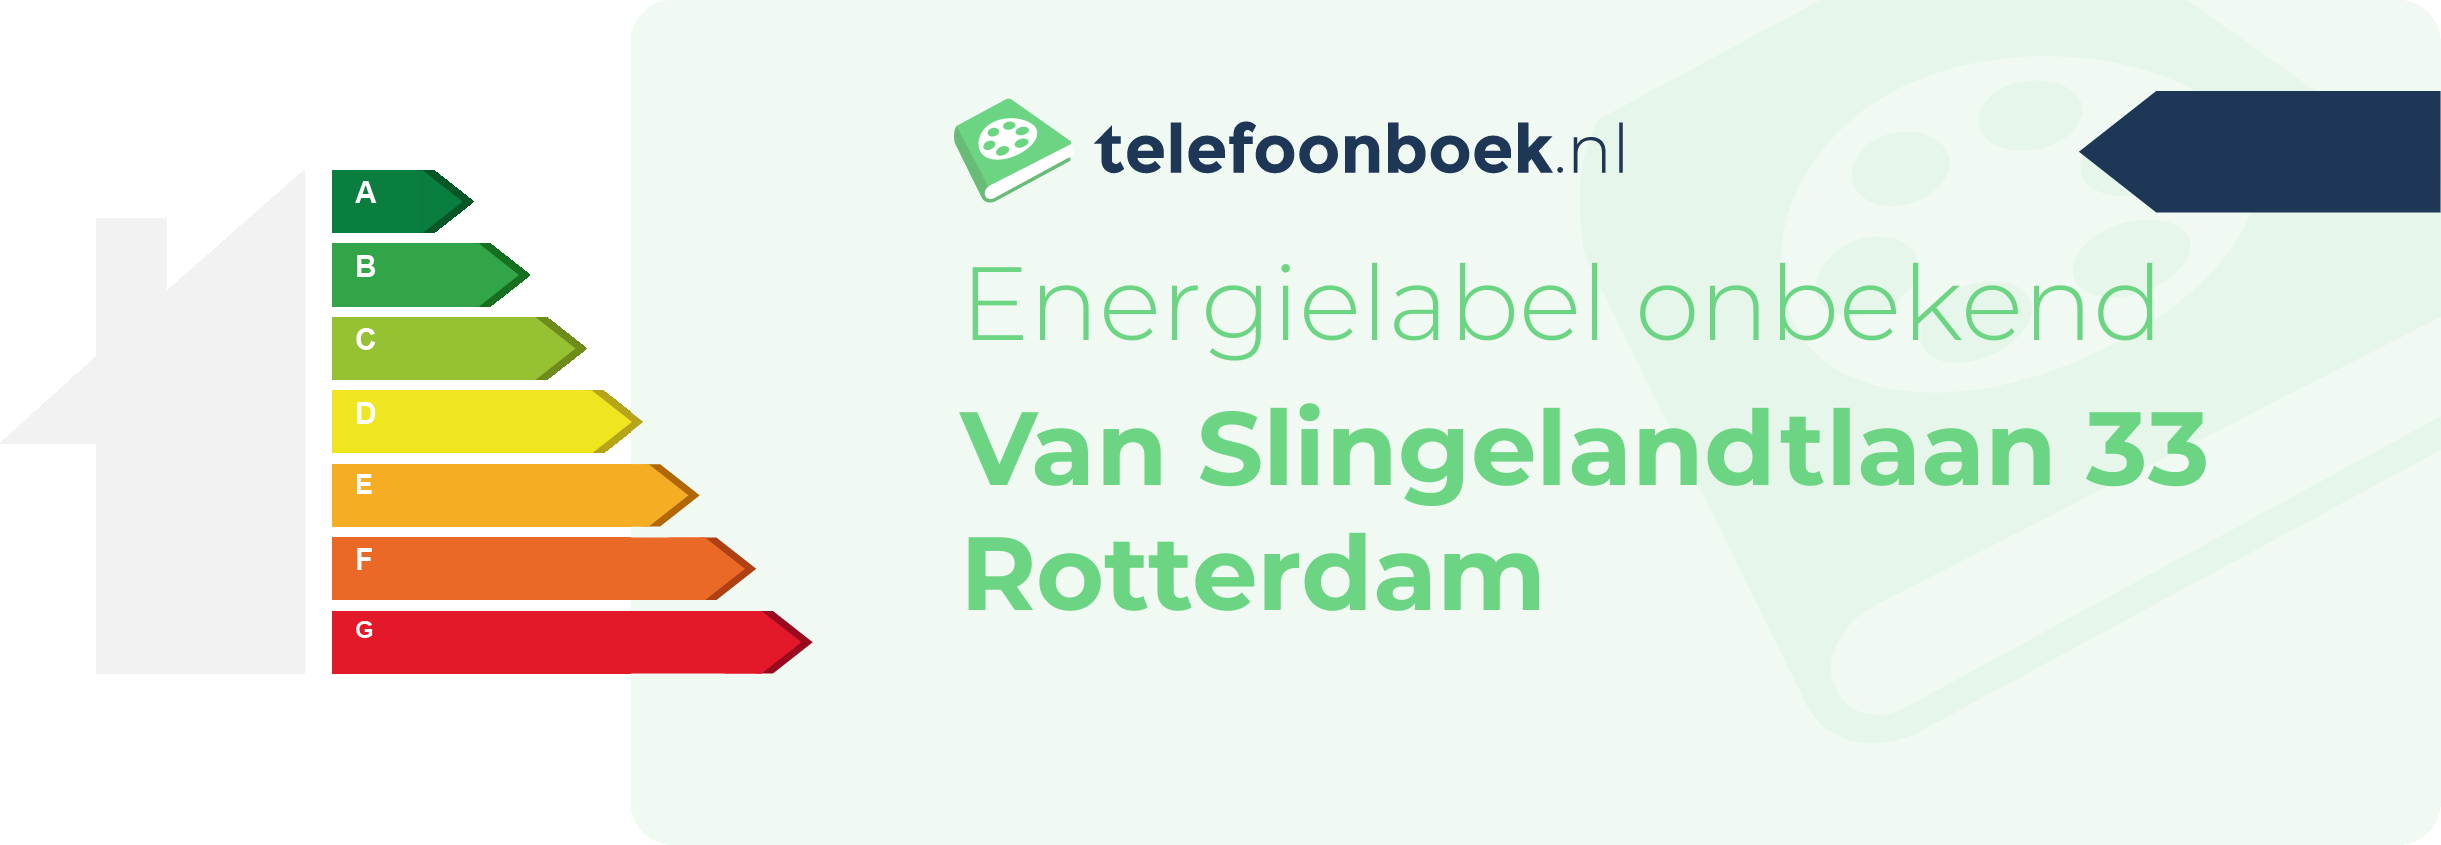 Energielabel Van Slingelandtlaan 33 Rotterdam